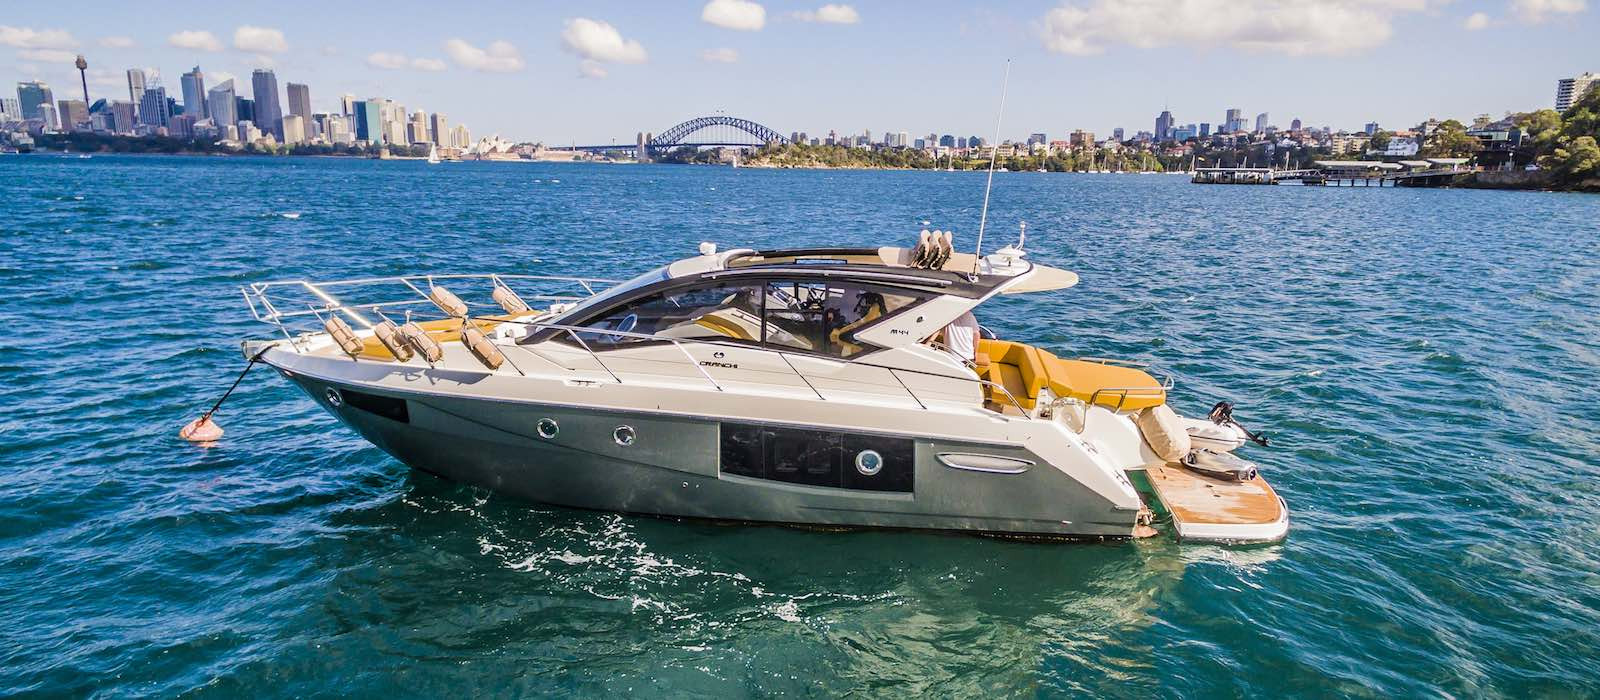 Aqualuxe luxury boat hire main profile image